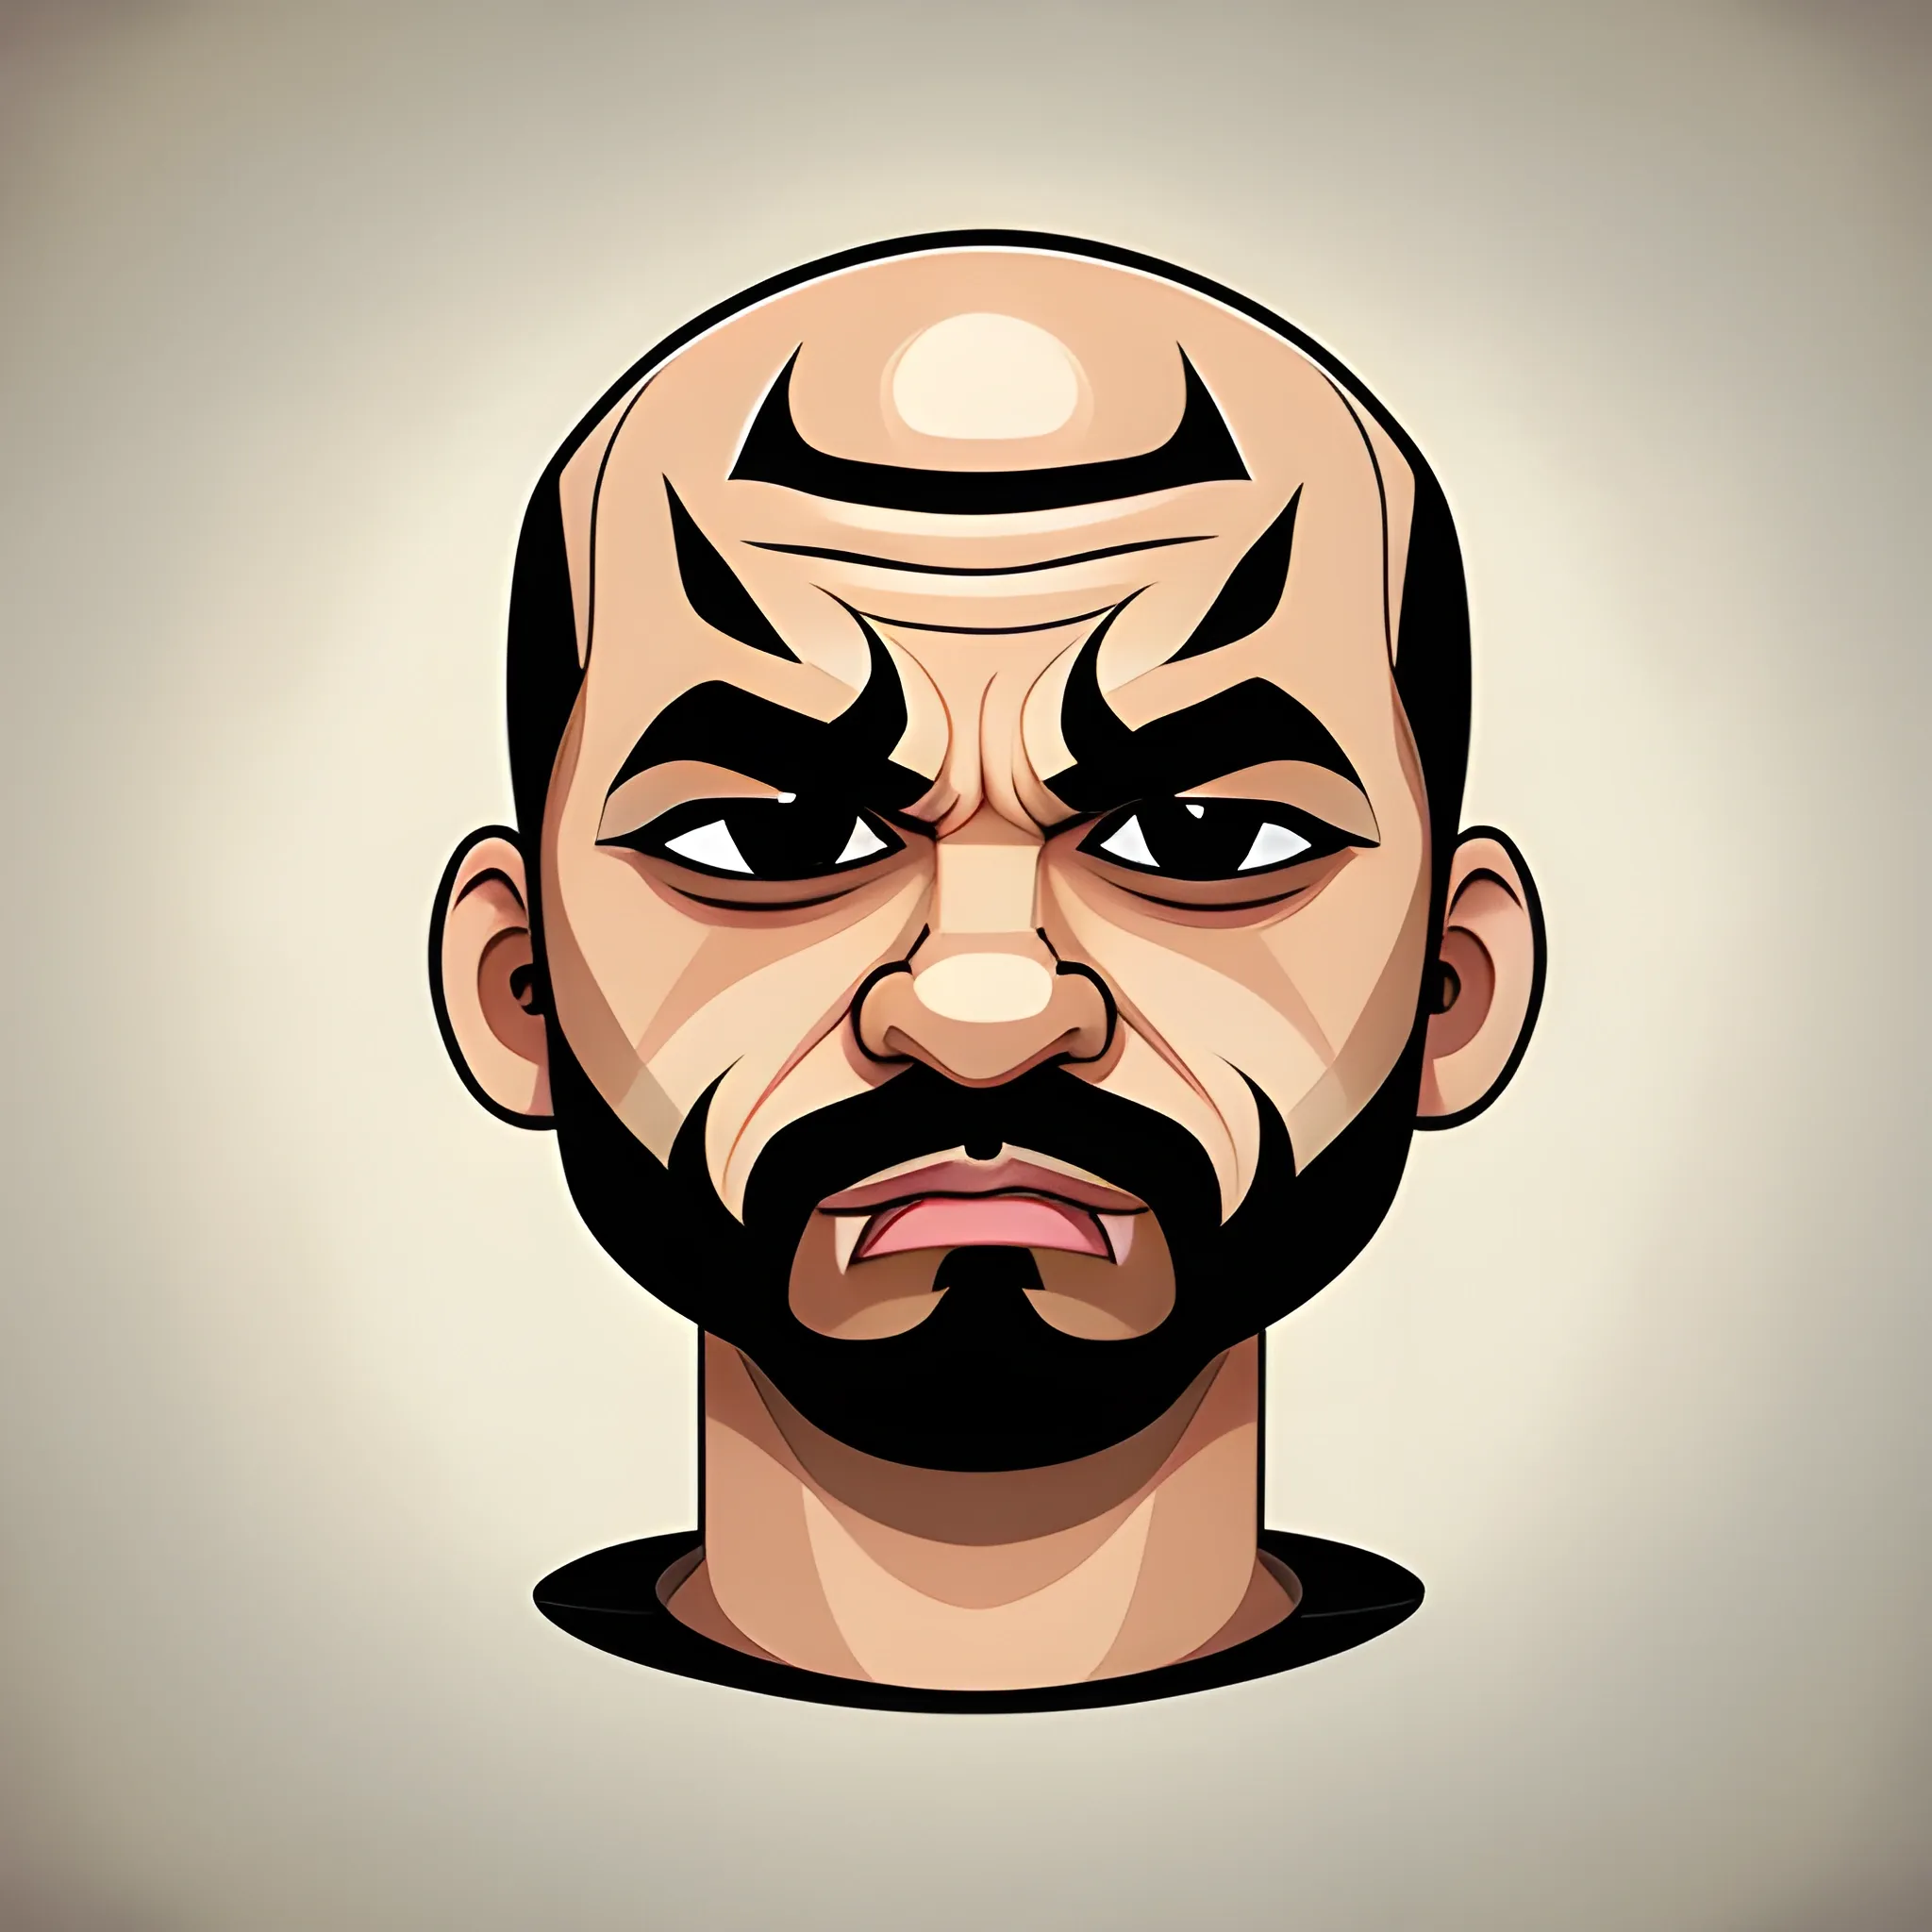 bald cholo Cartoon, draw art vector, avatar style, chicano art

